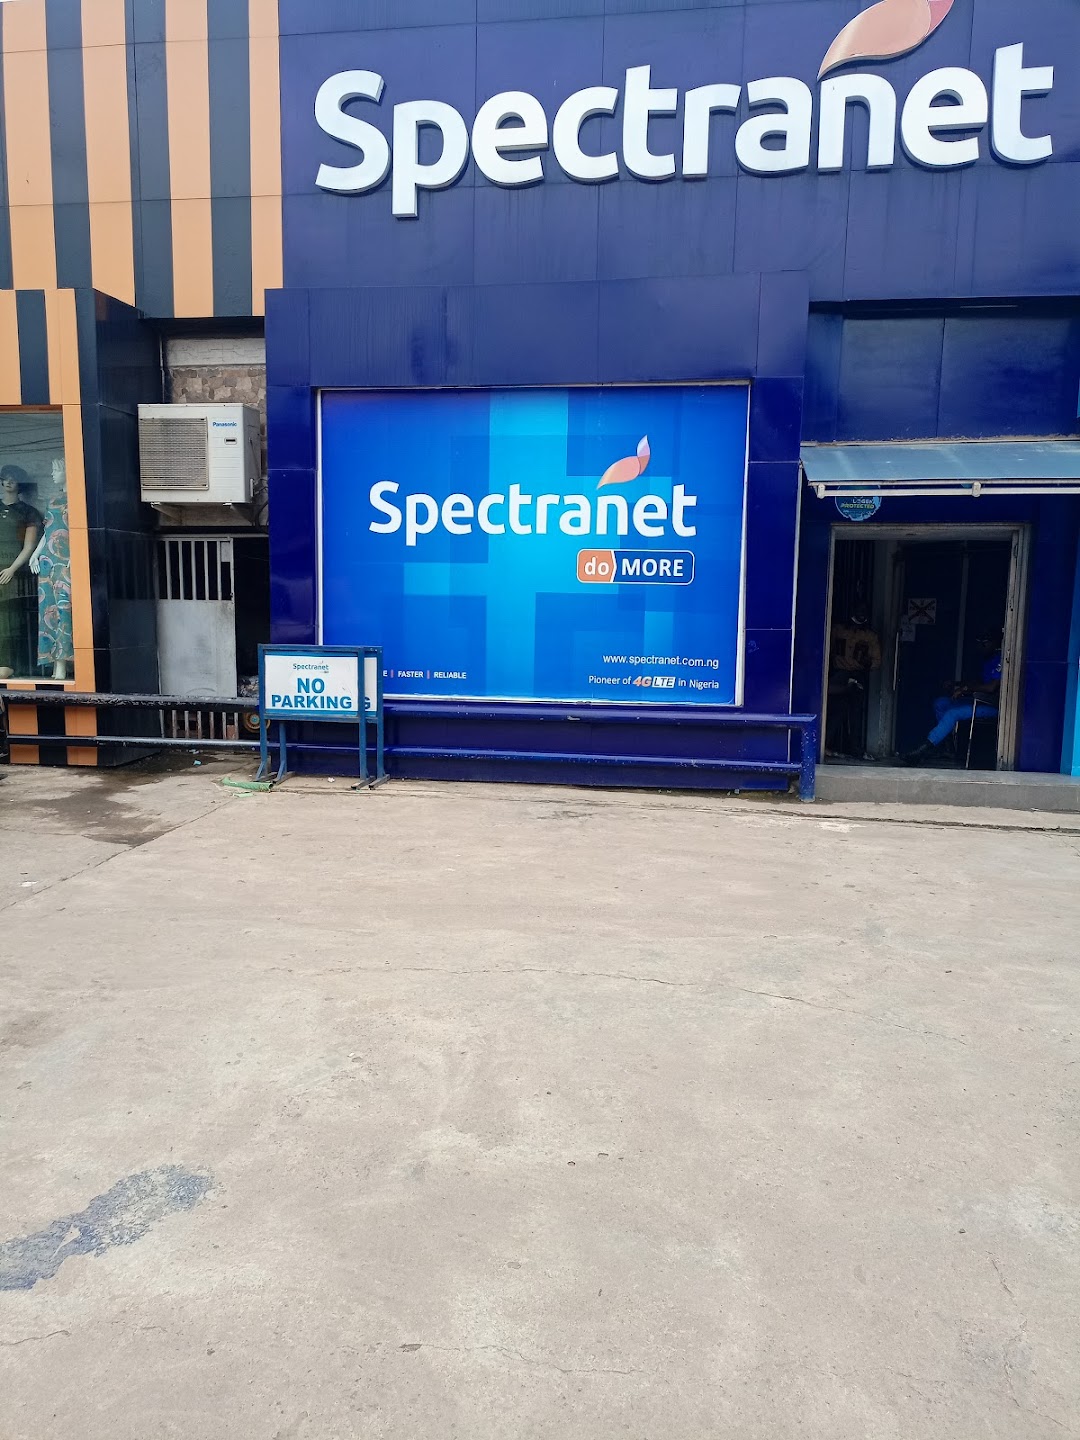 Spectranet 4G LTE